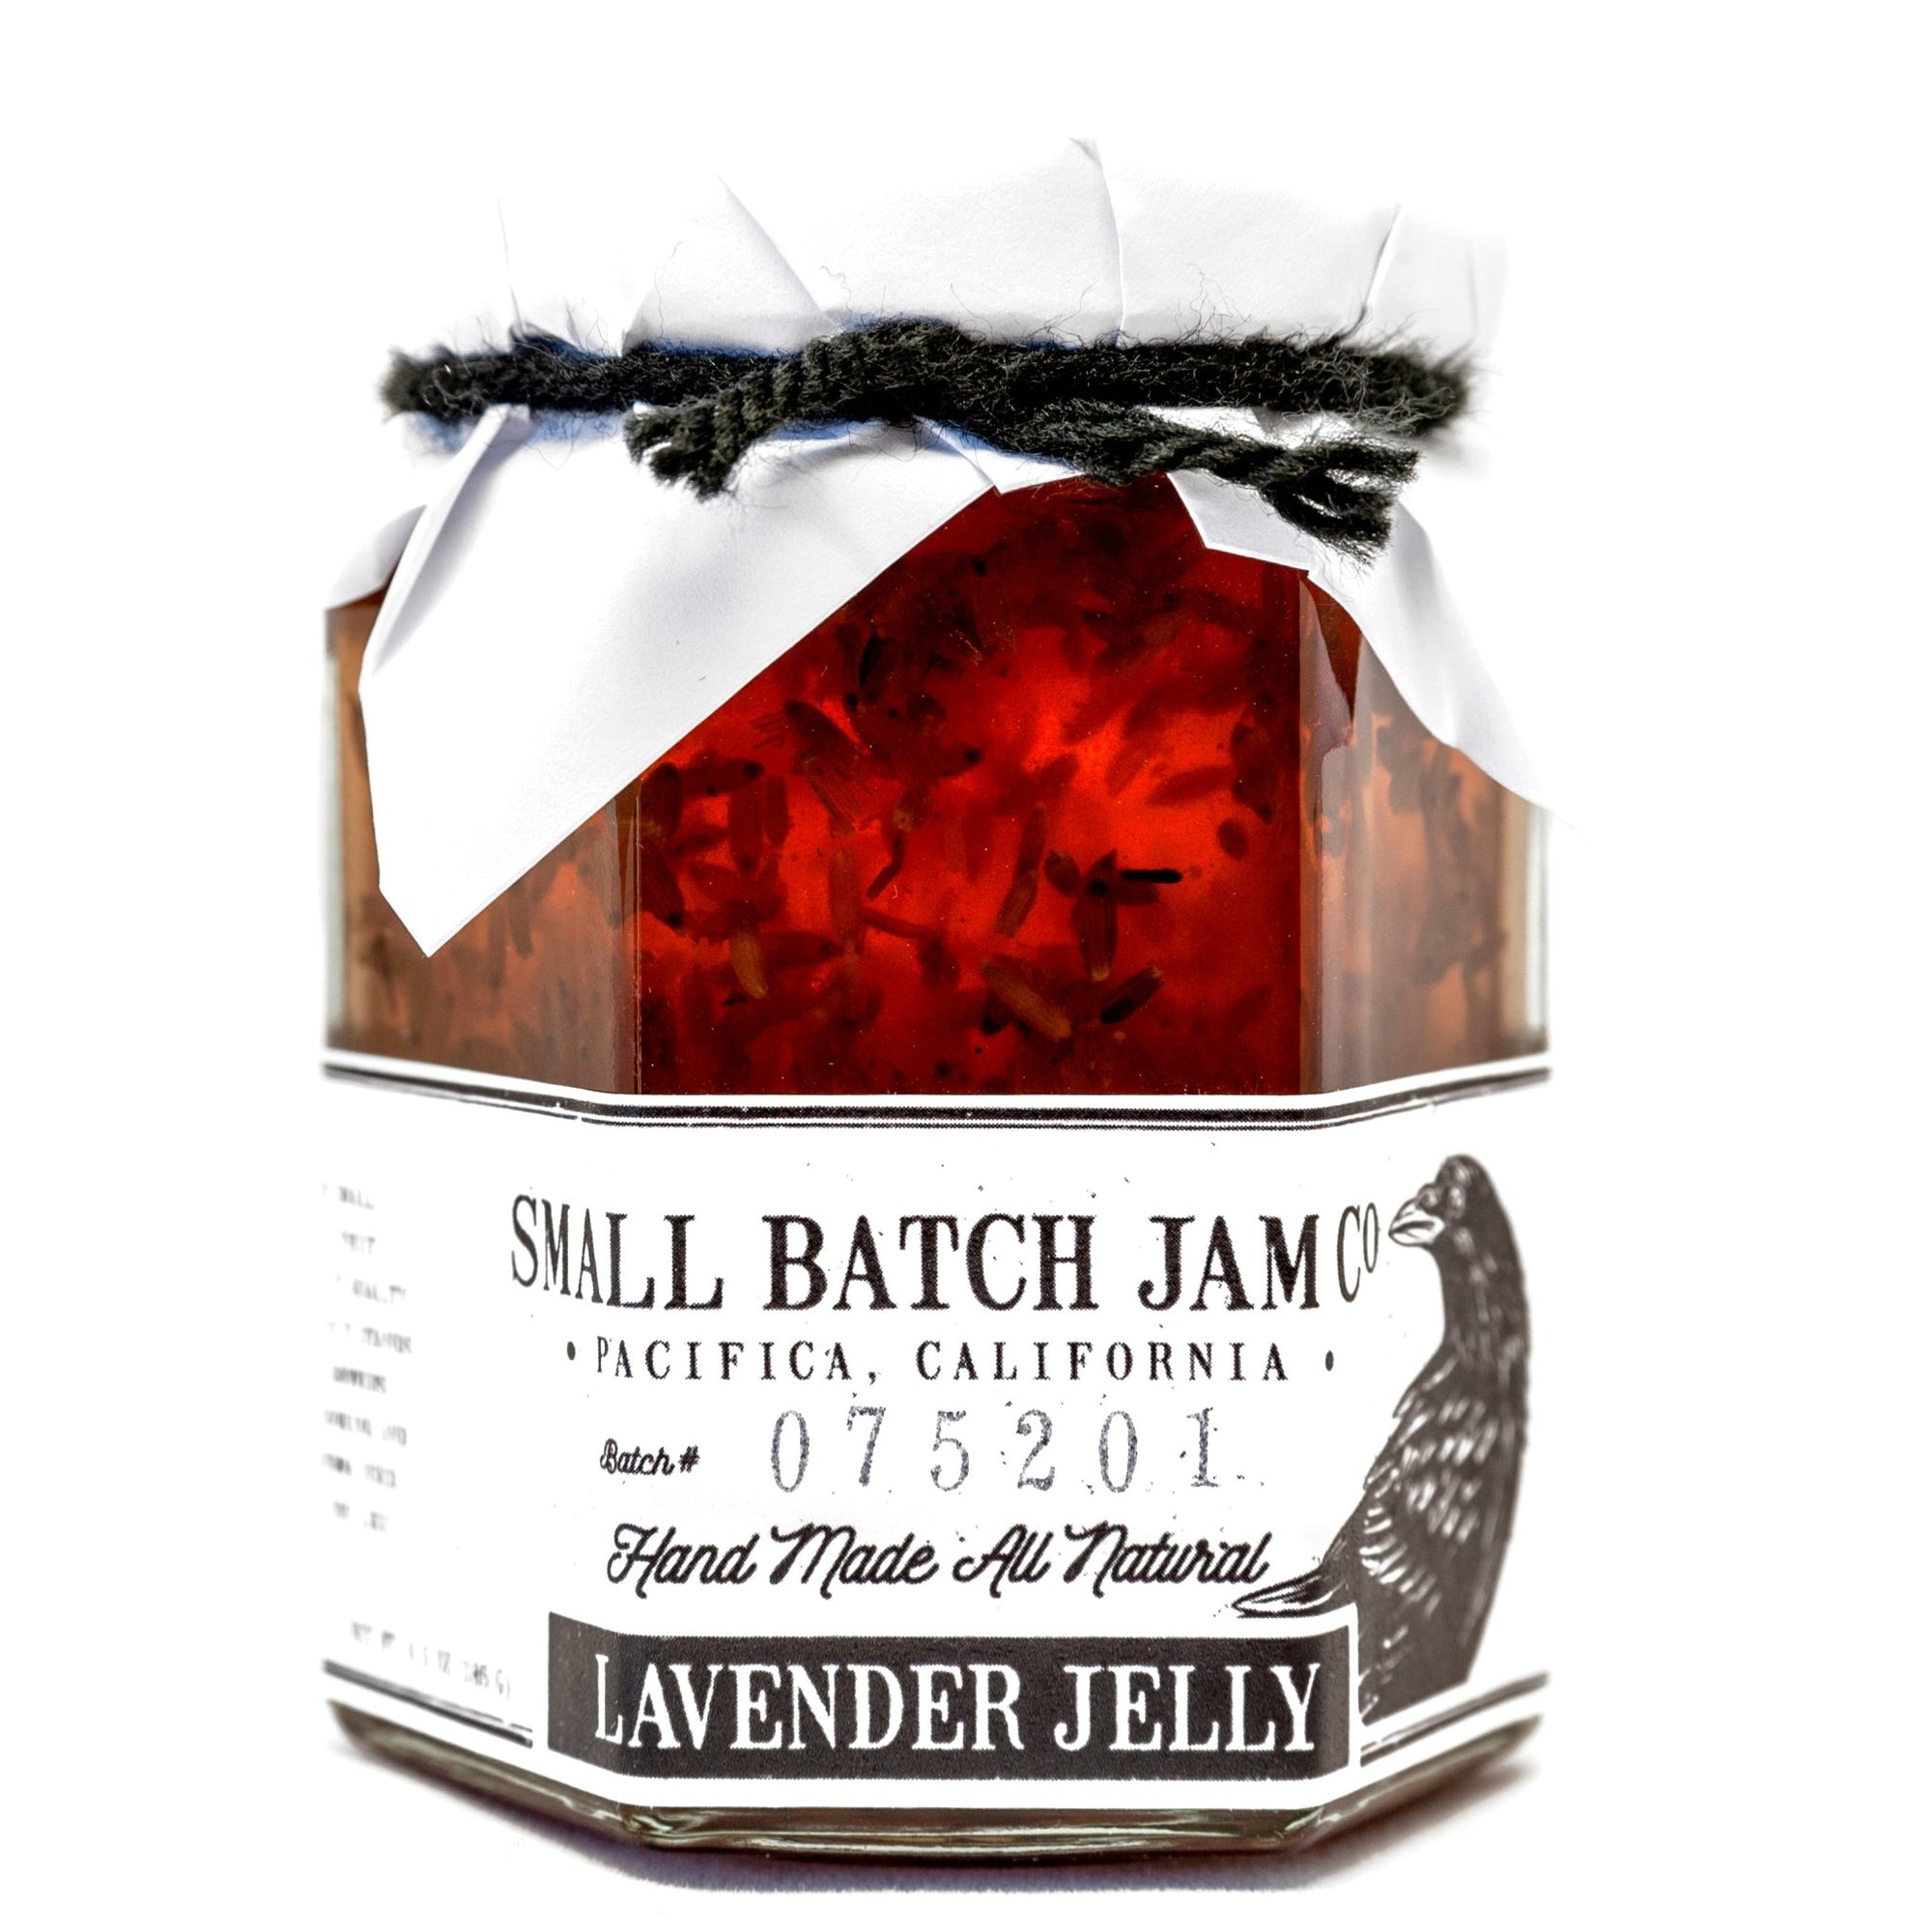 Lavender Jelly - Small Batch Jam Co